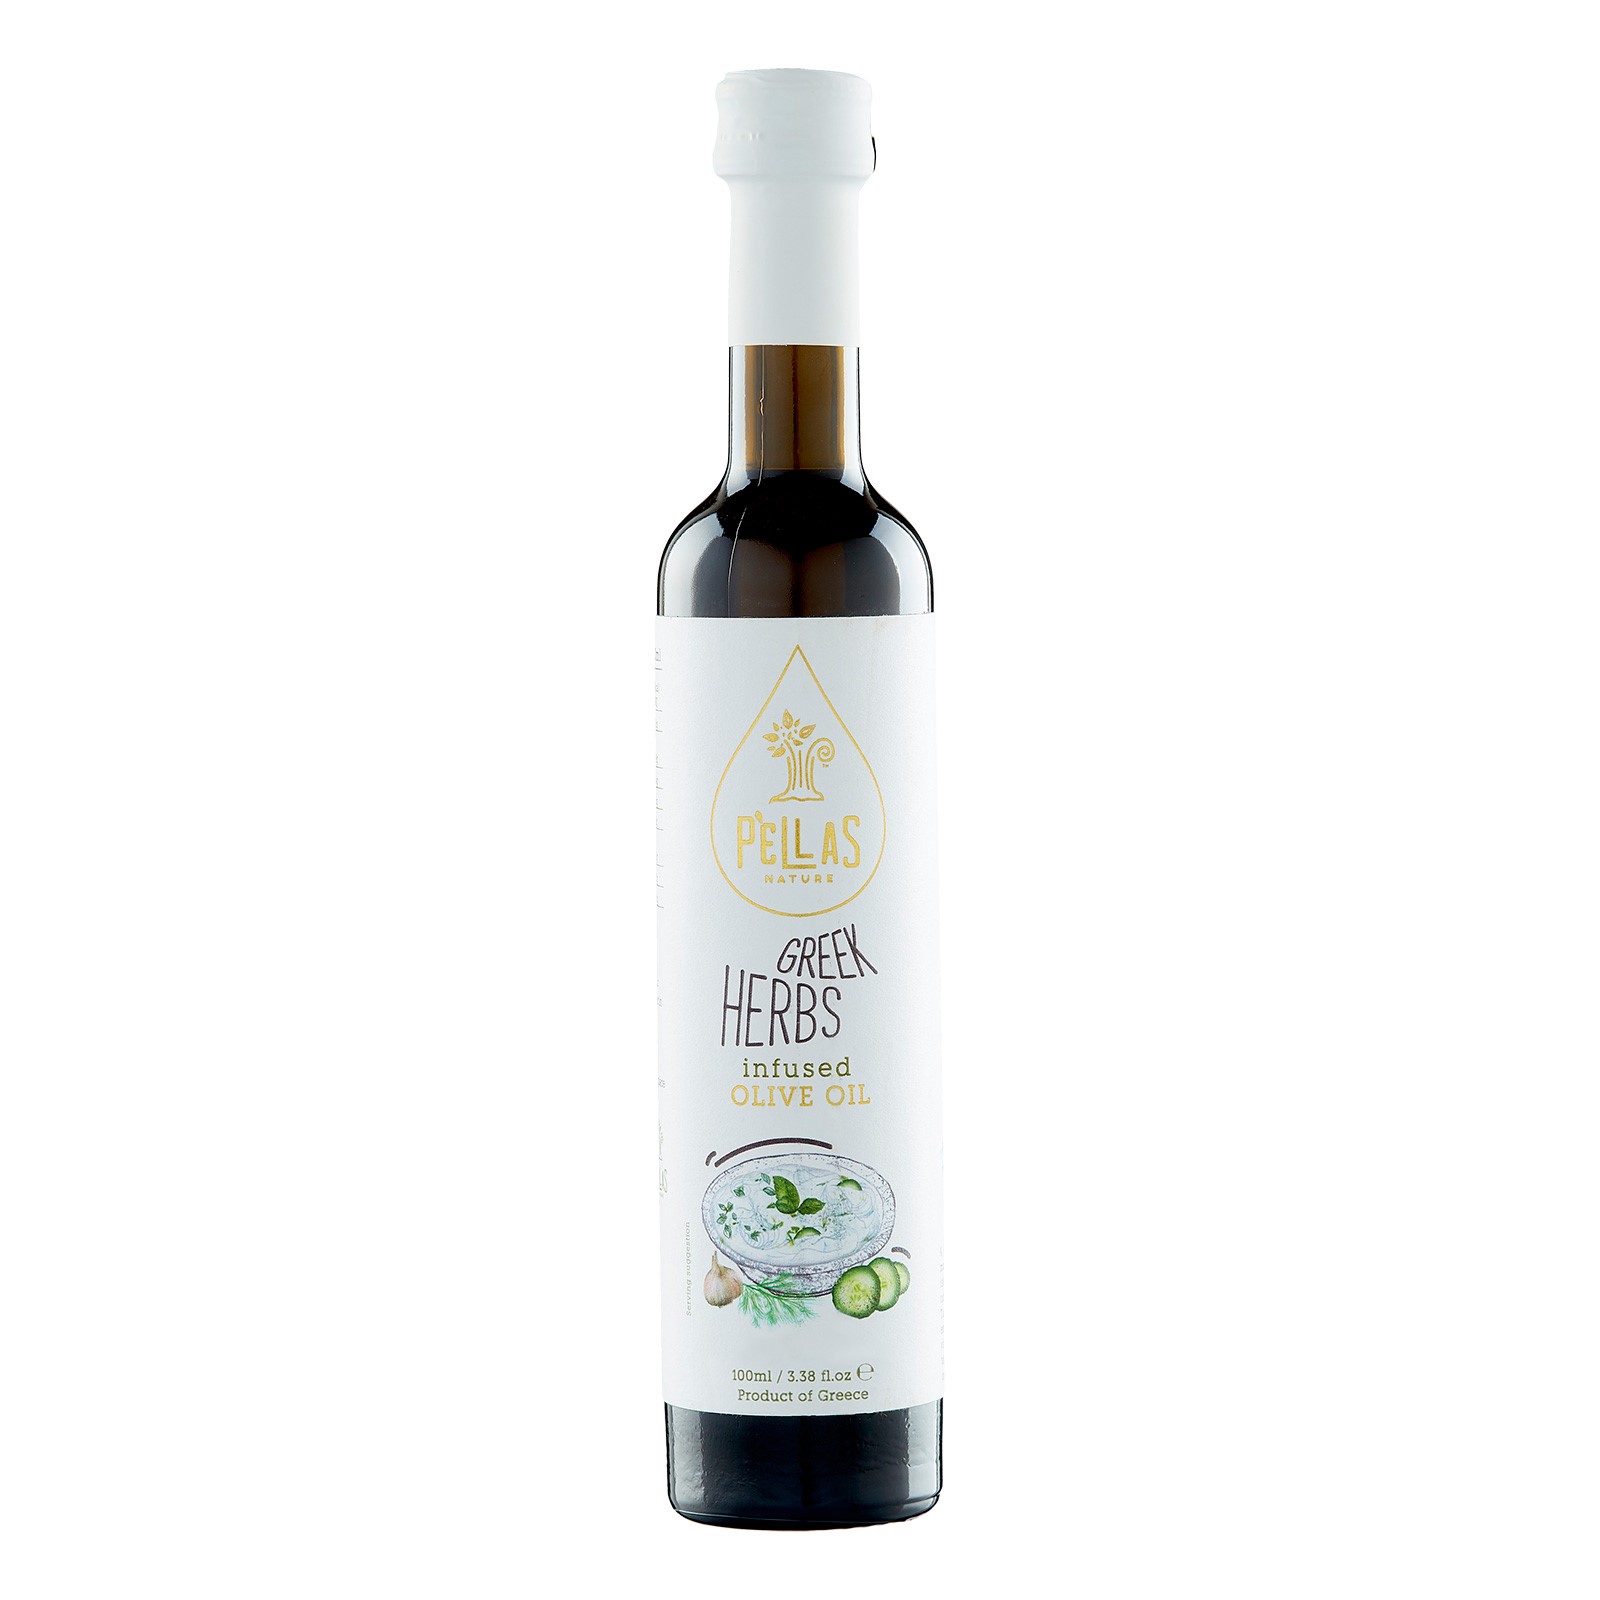 Pellas Nature Greek Herbs infused Extra Virgin Olive Oil 3.38 fl.oz Bottle